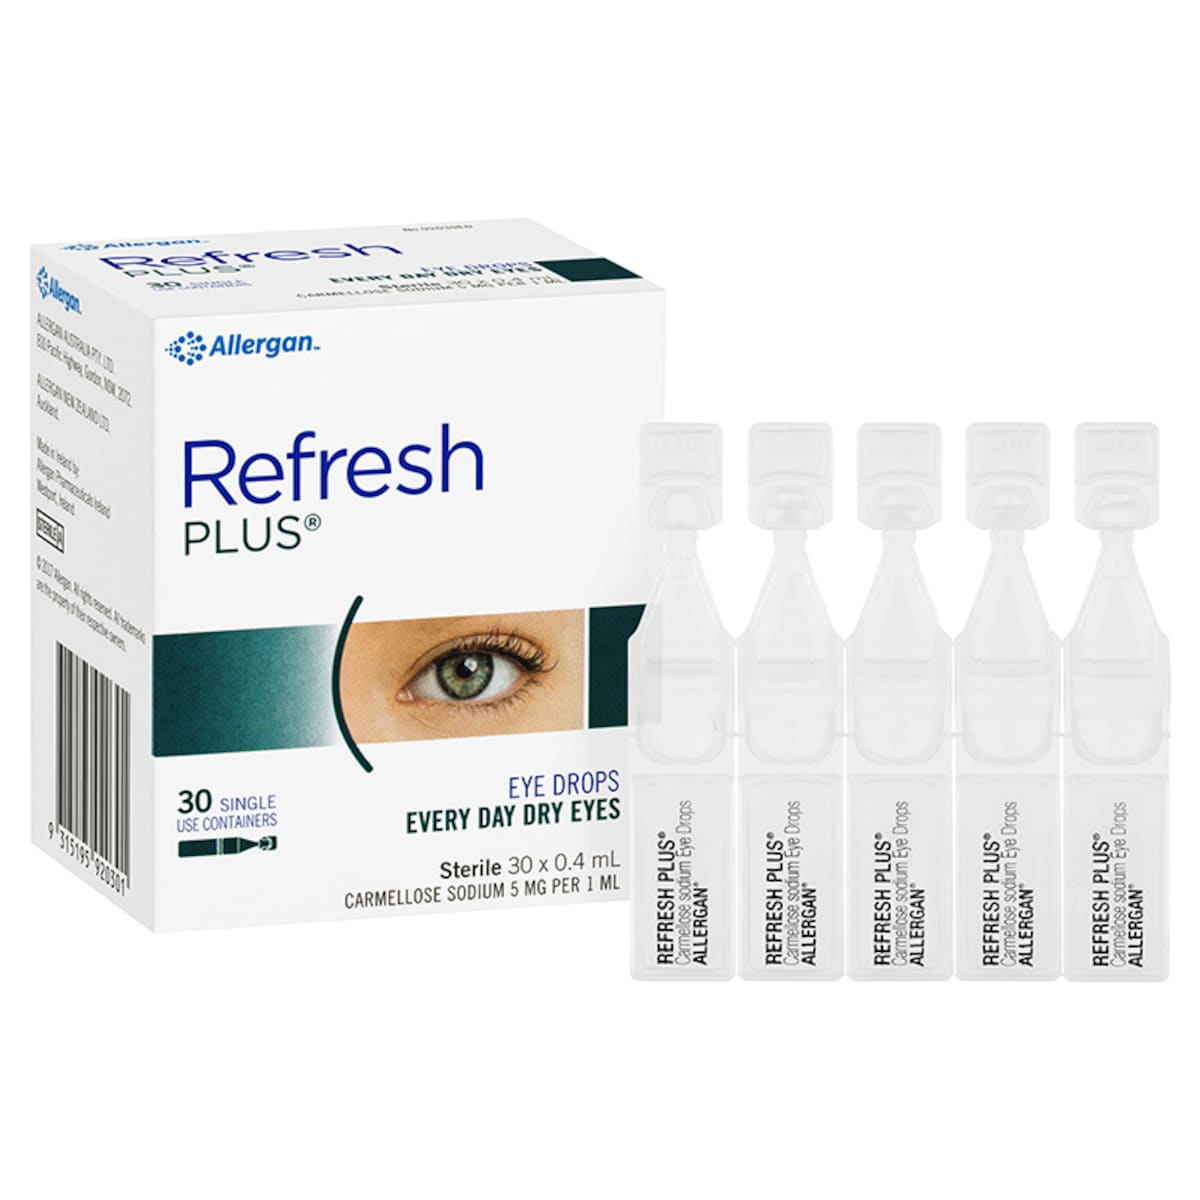 Refresh Plus Lubricant Eye Drops 0.4ml x 30 Vials